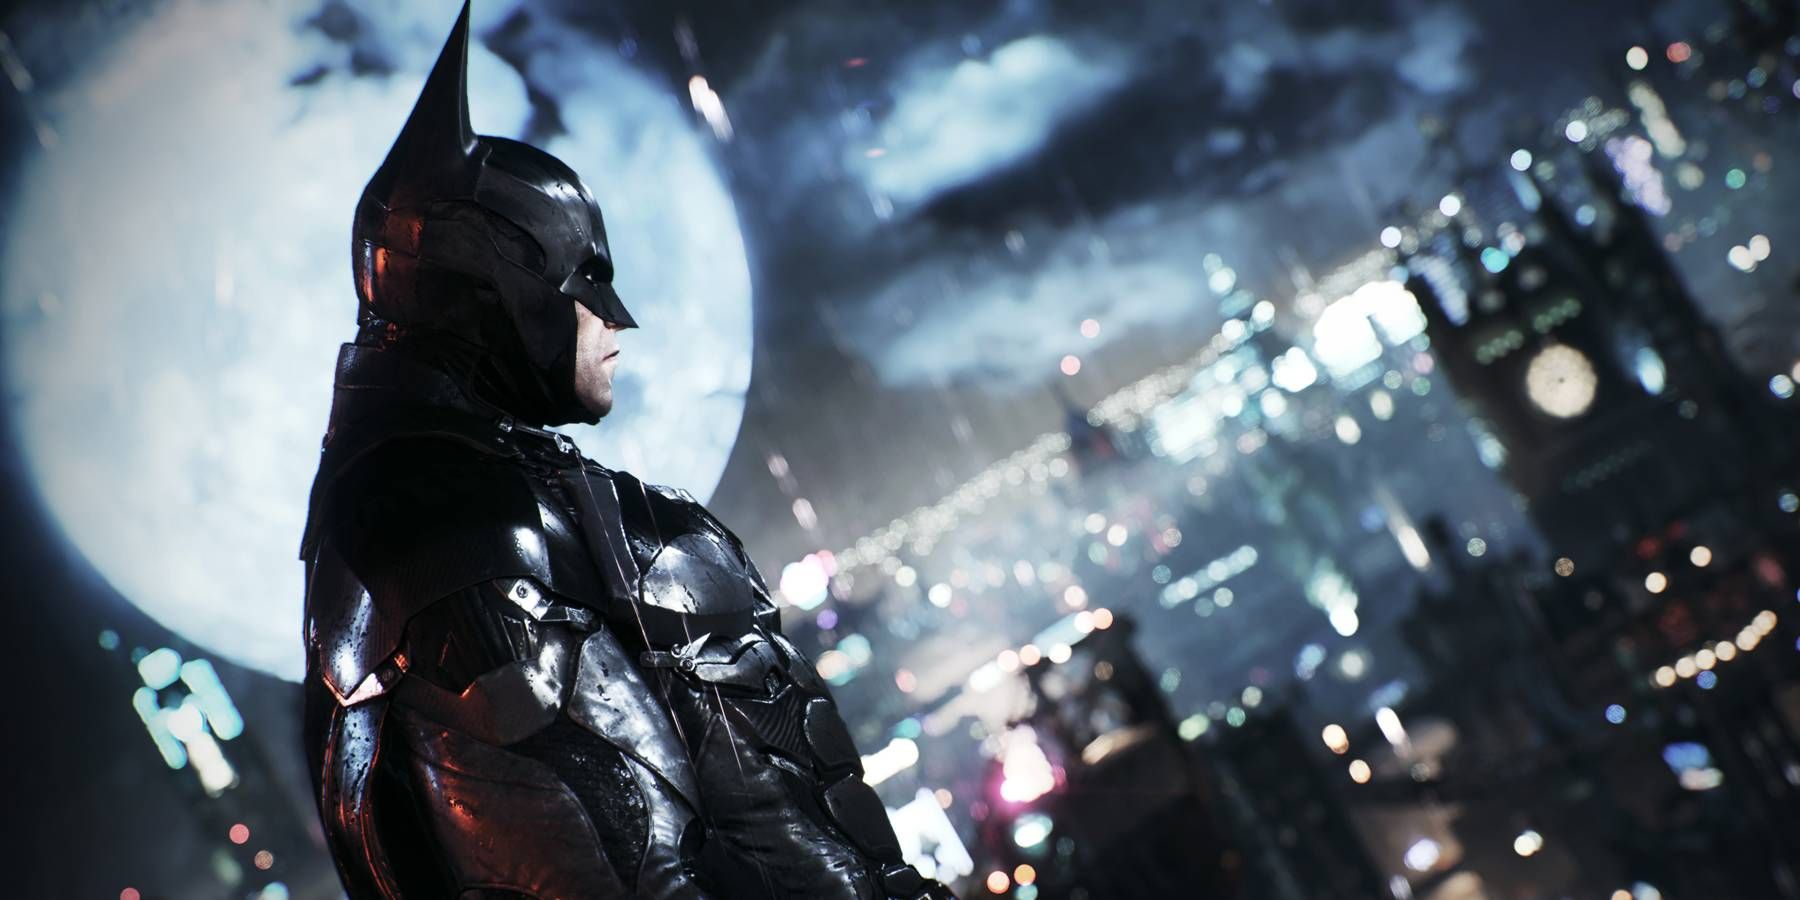 Batman overlooking Gotham City in Batman: Arkham Knight